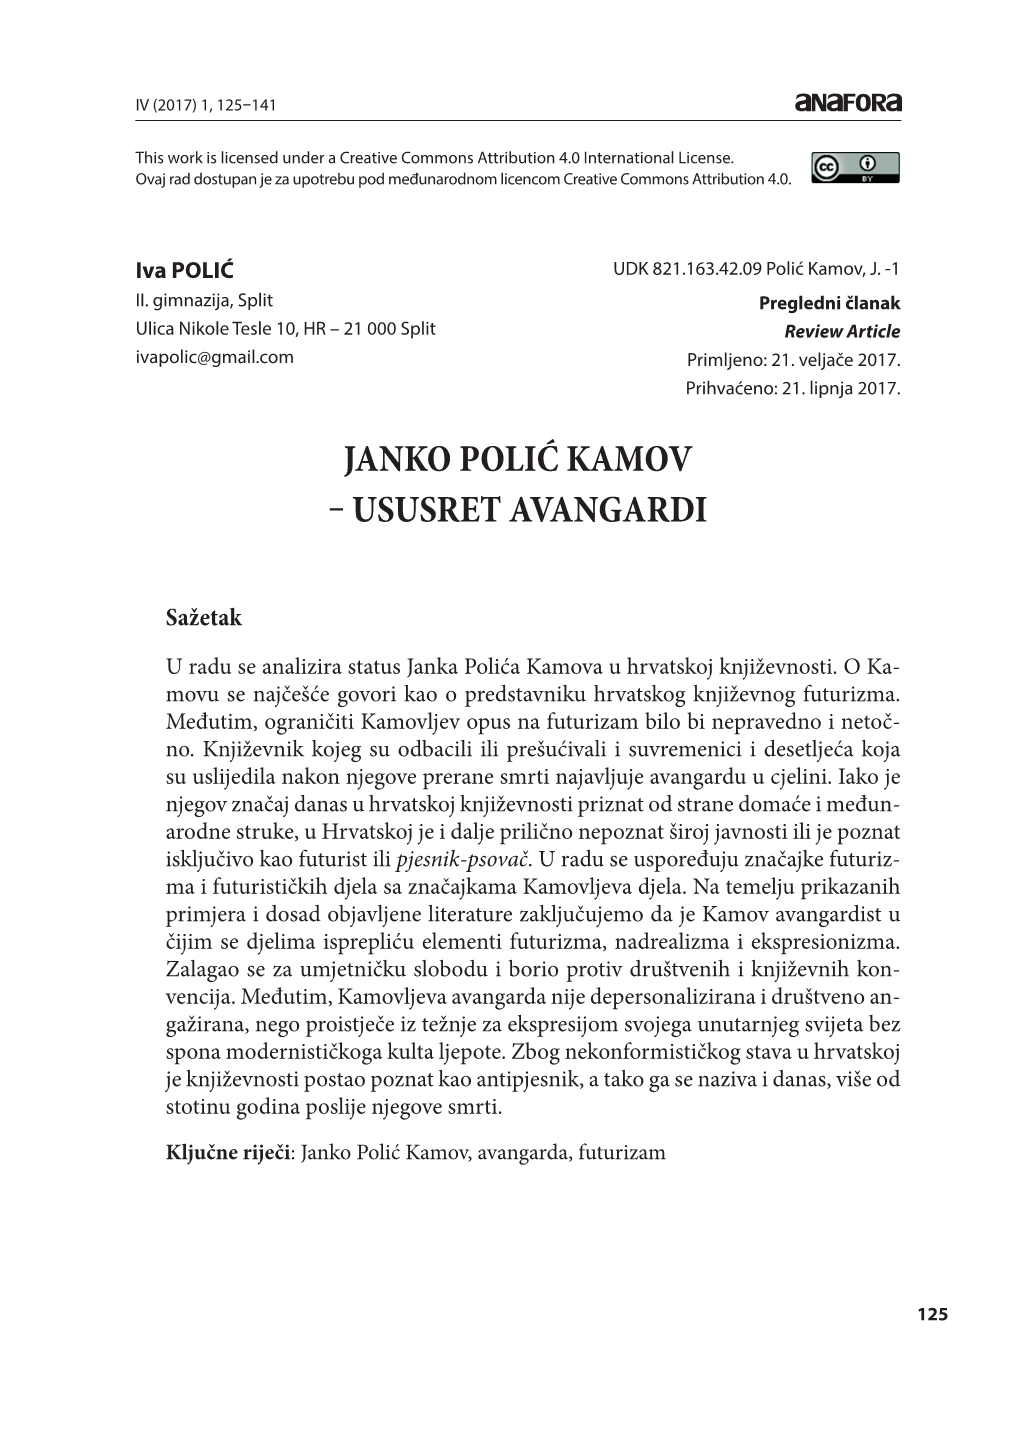 Janko Polić Kamov ‒ Ususret Avangardi